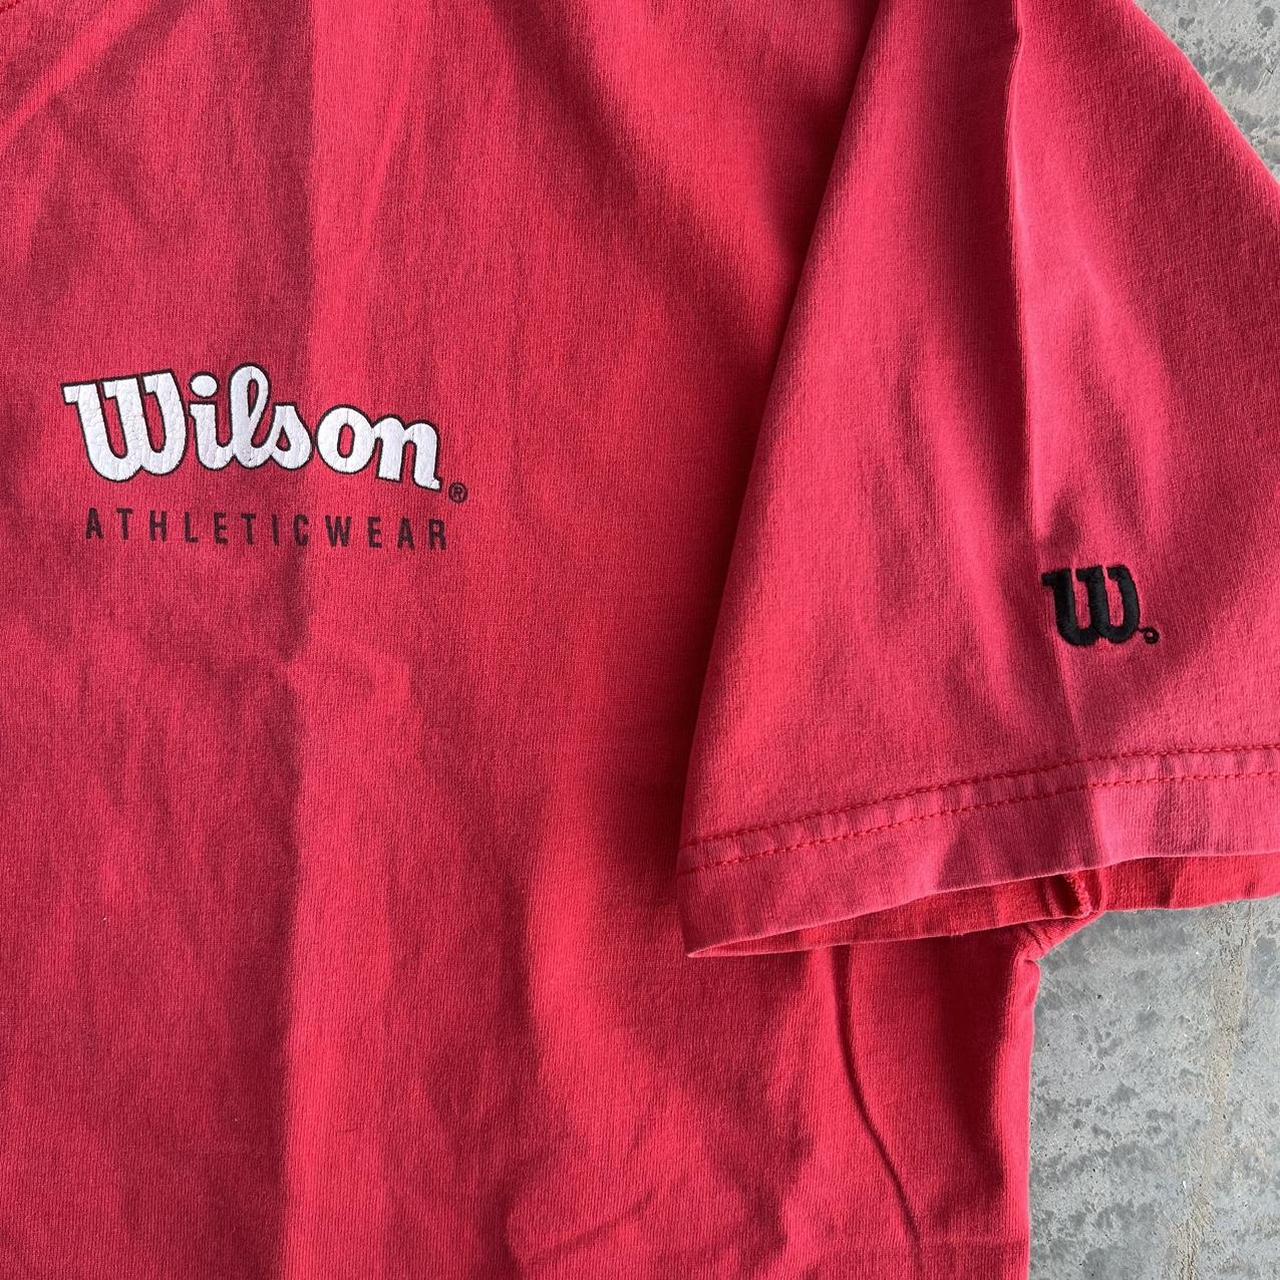 Vintage 90's Wilson Athletic Wear Red Faded - Depop